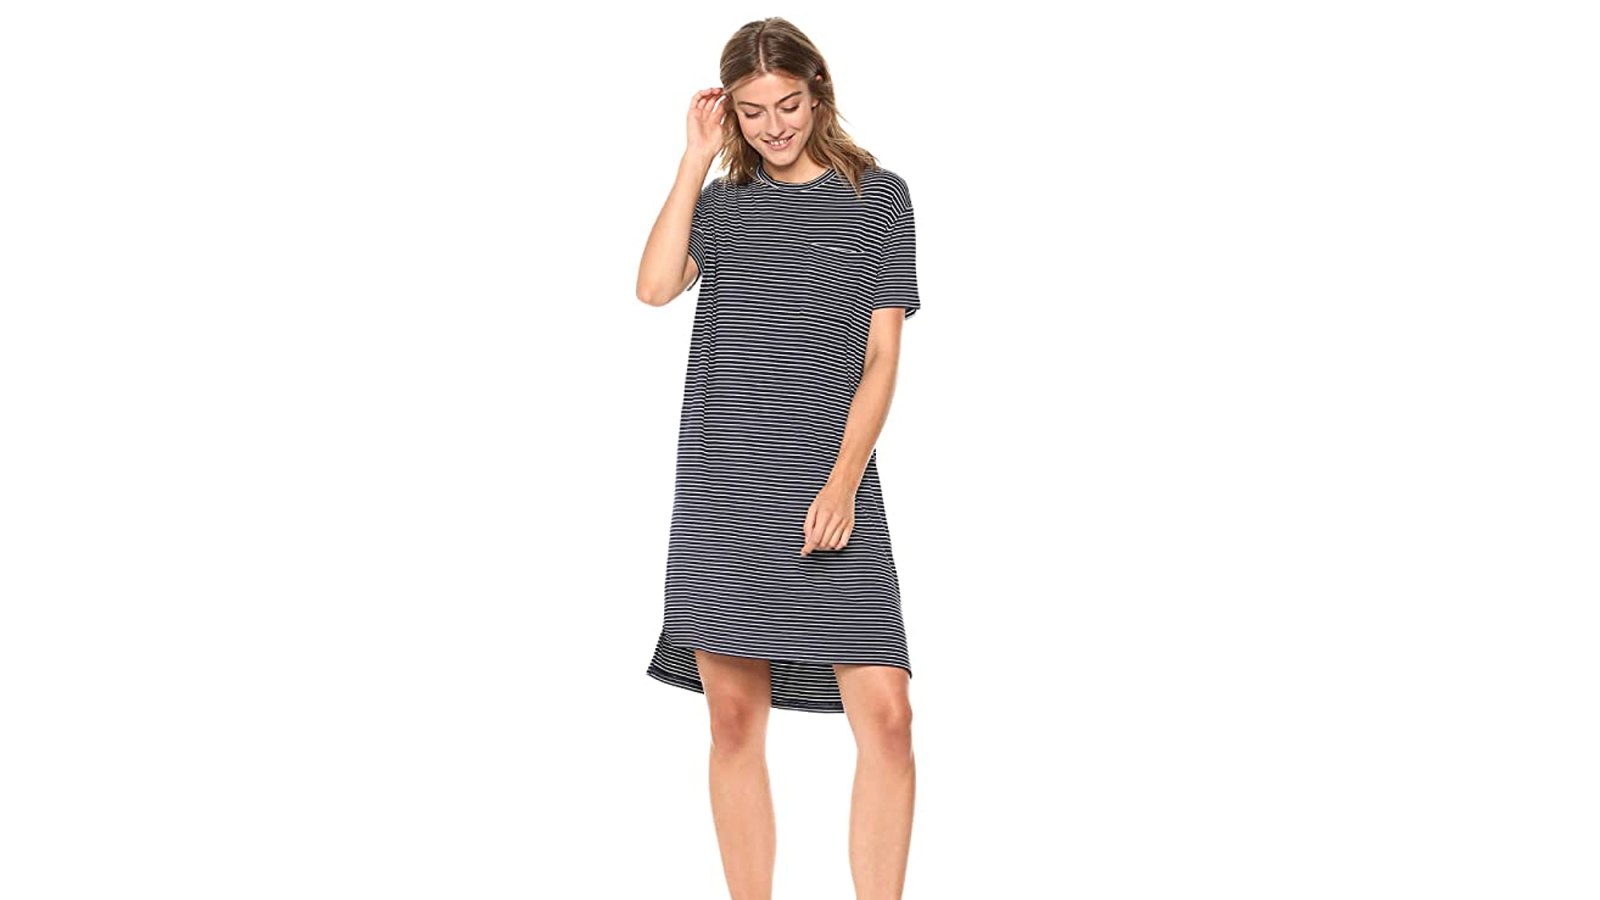 Daily Ritual Women's Jersey Short-Sleeve Boxy Pocket T-Shirt Dress